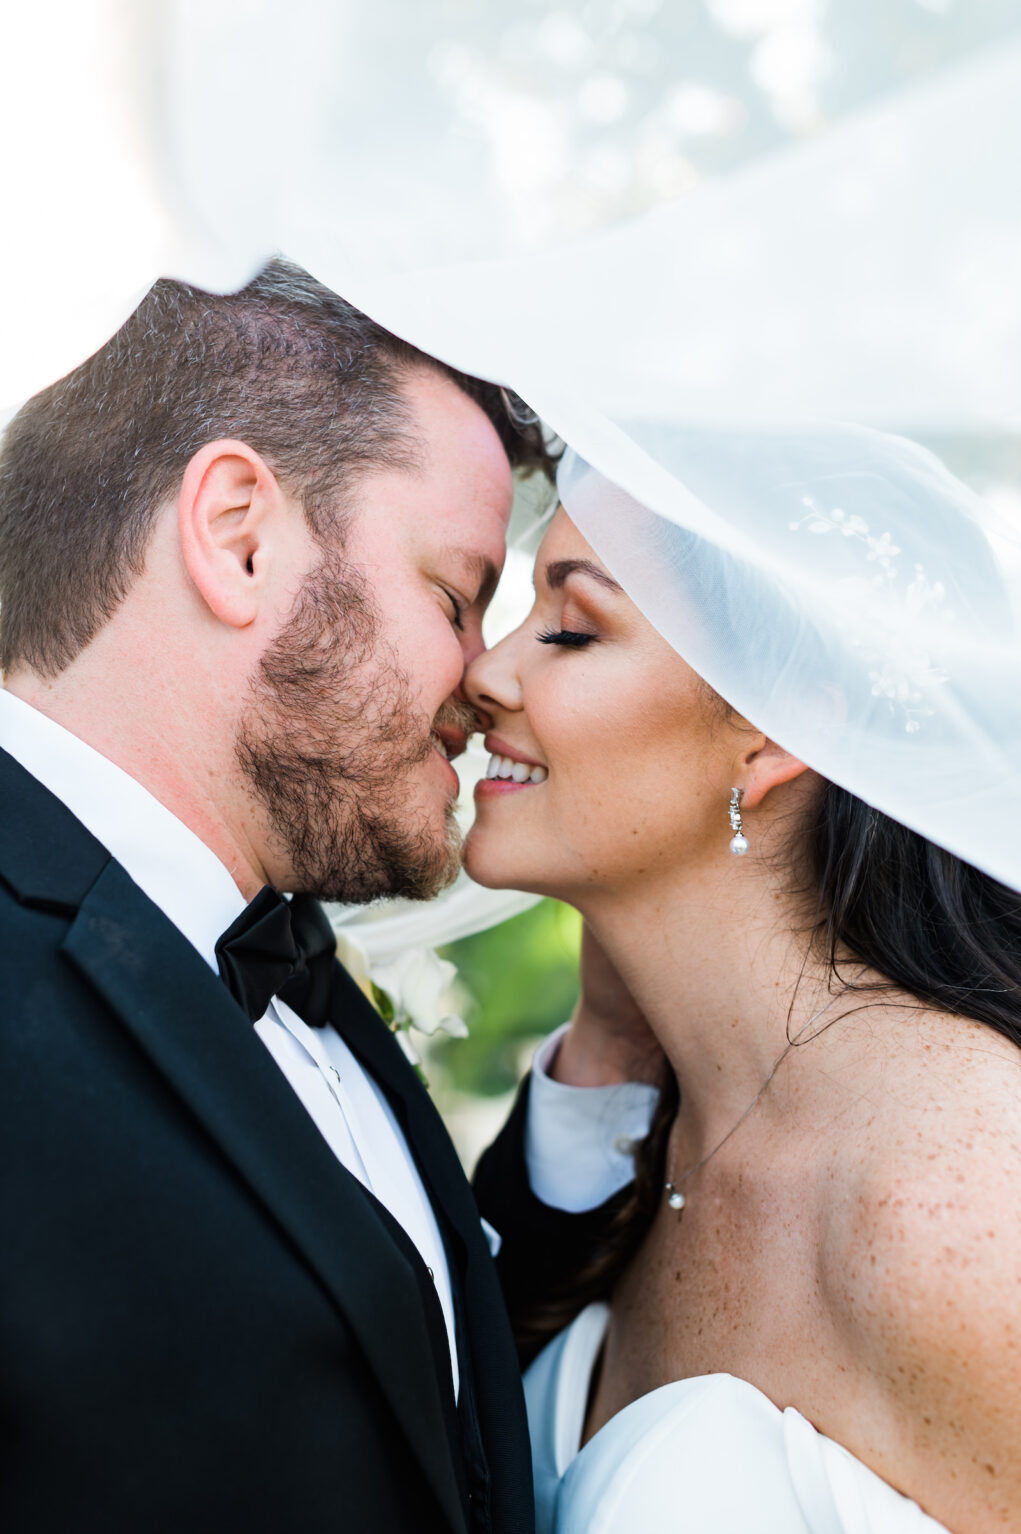 Florida Bride and Groom Wedding Kiss Portrait